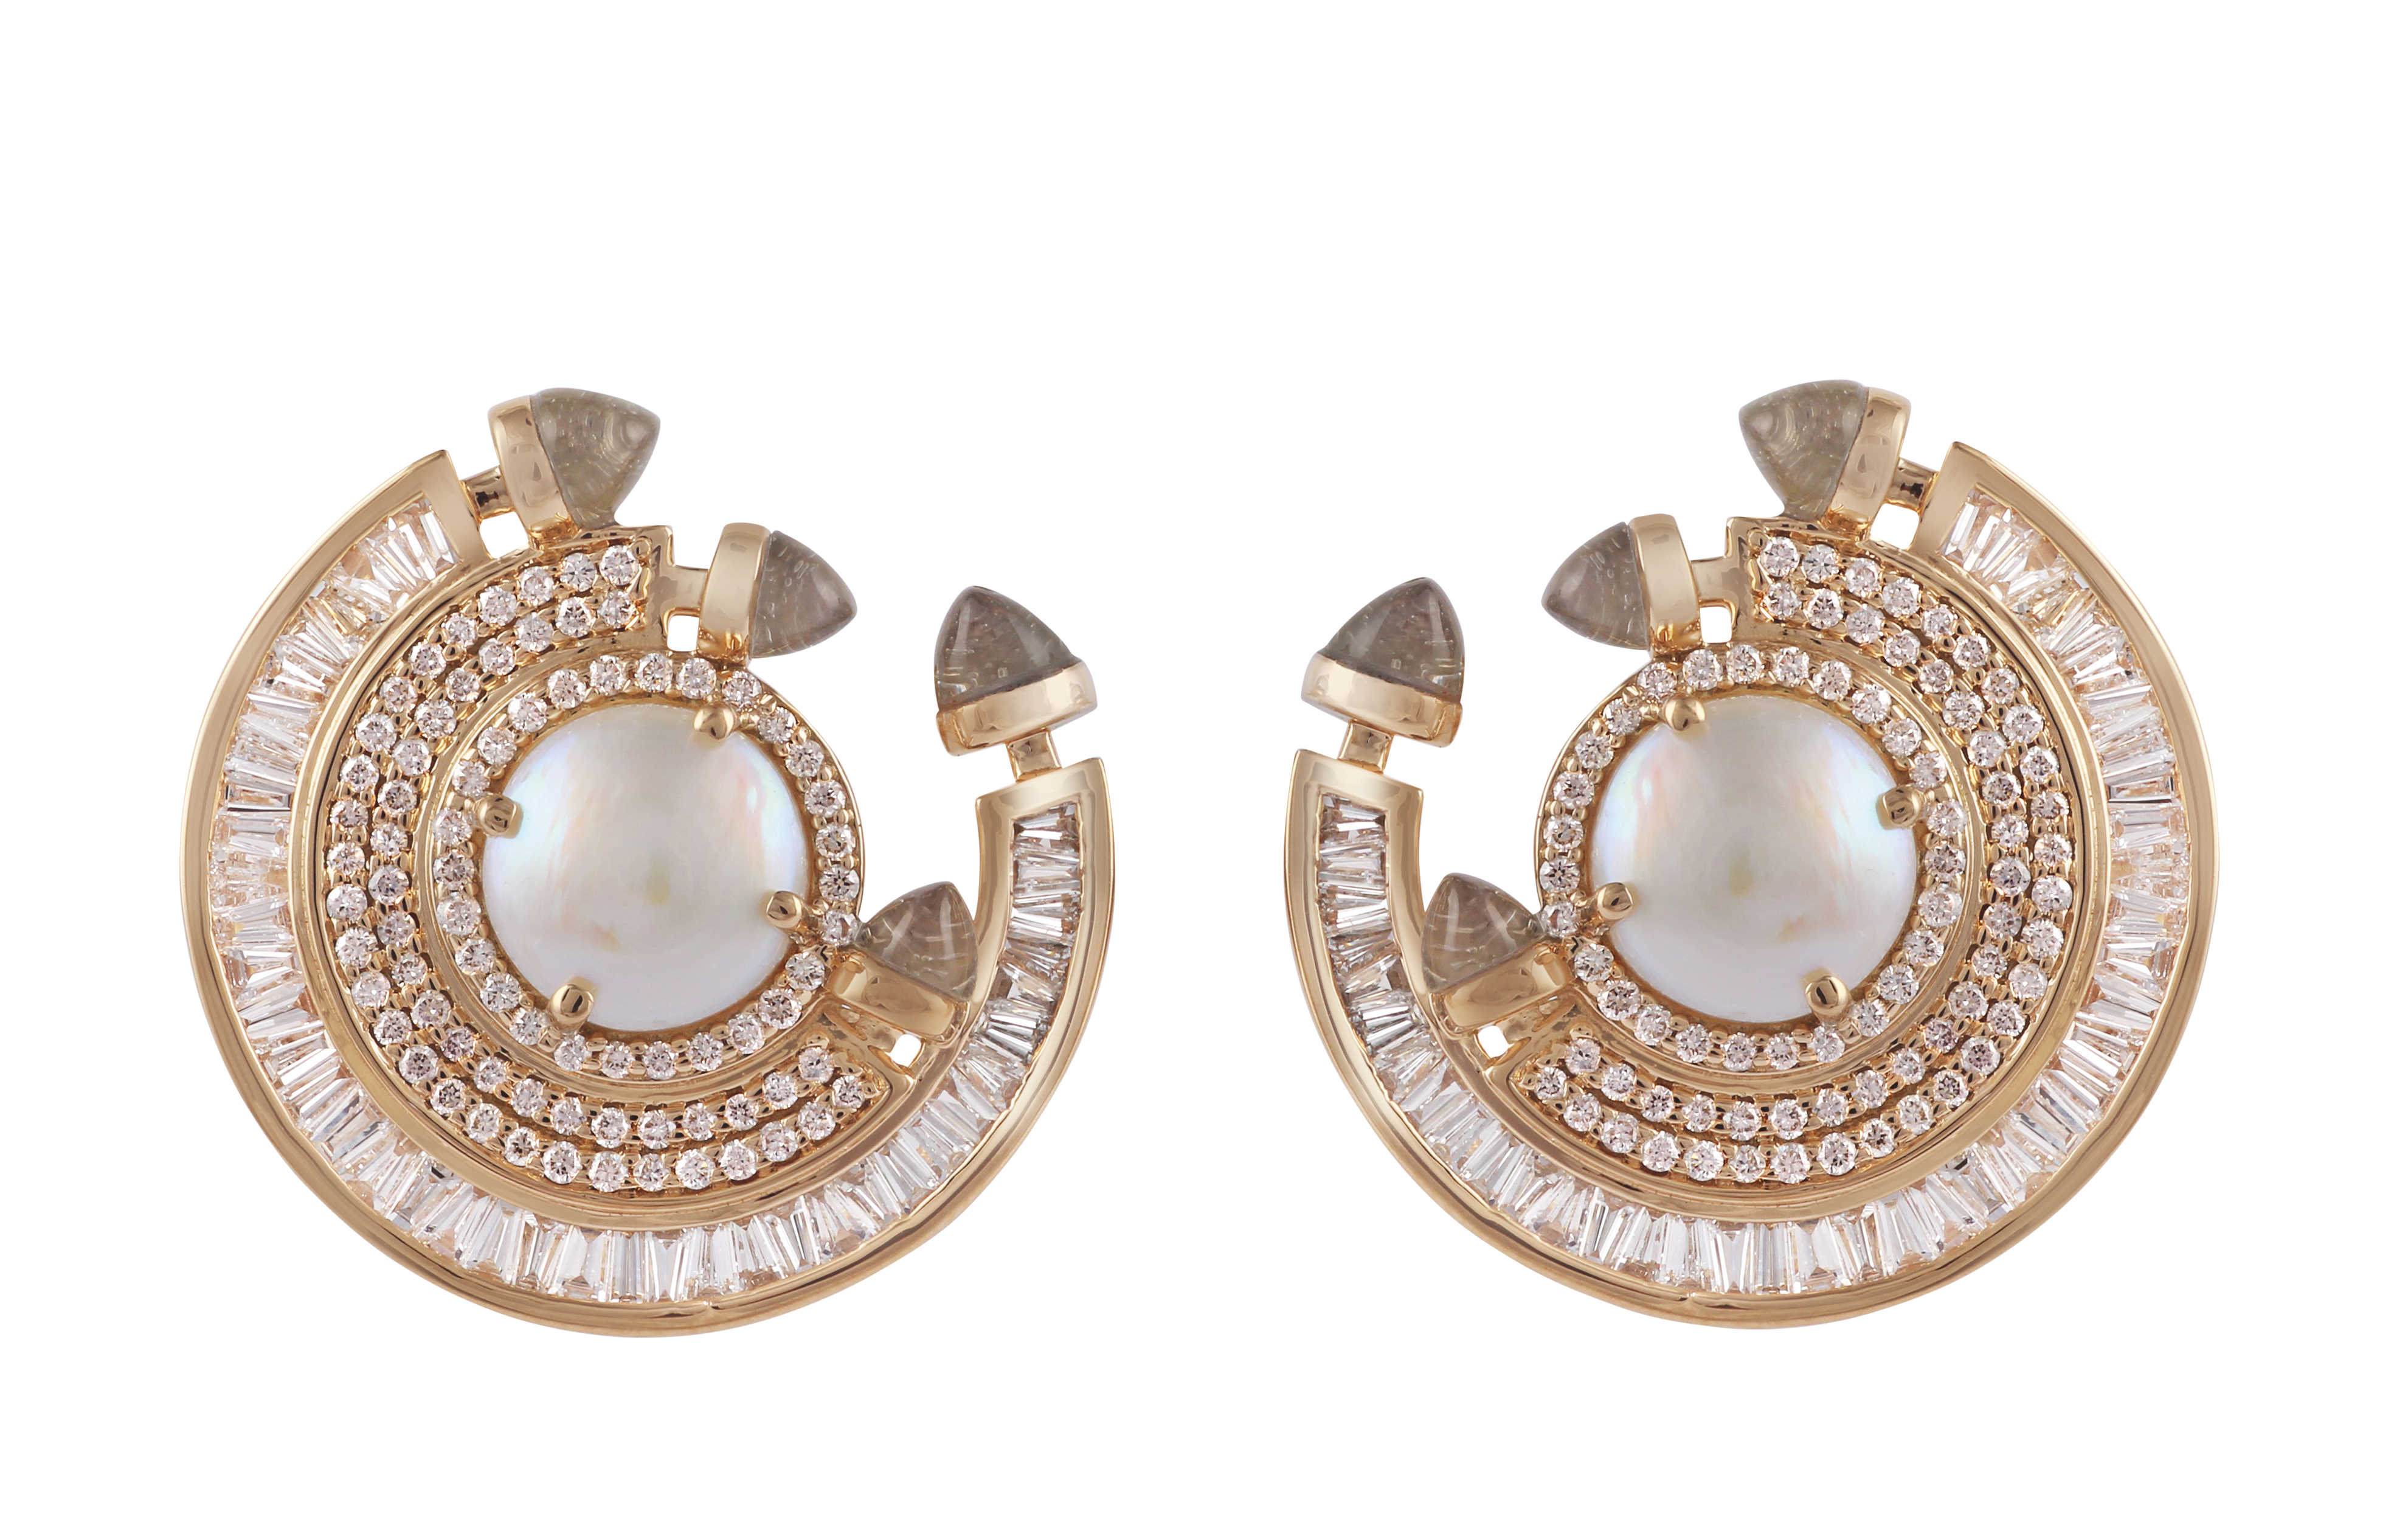 Golden Age - Ananya earrings